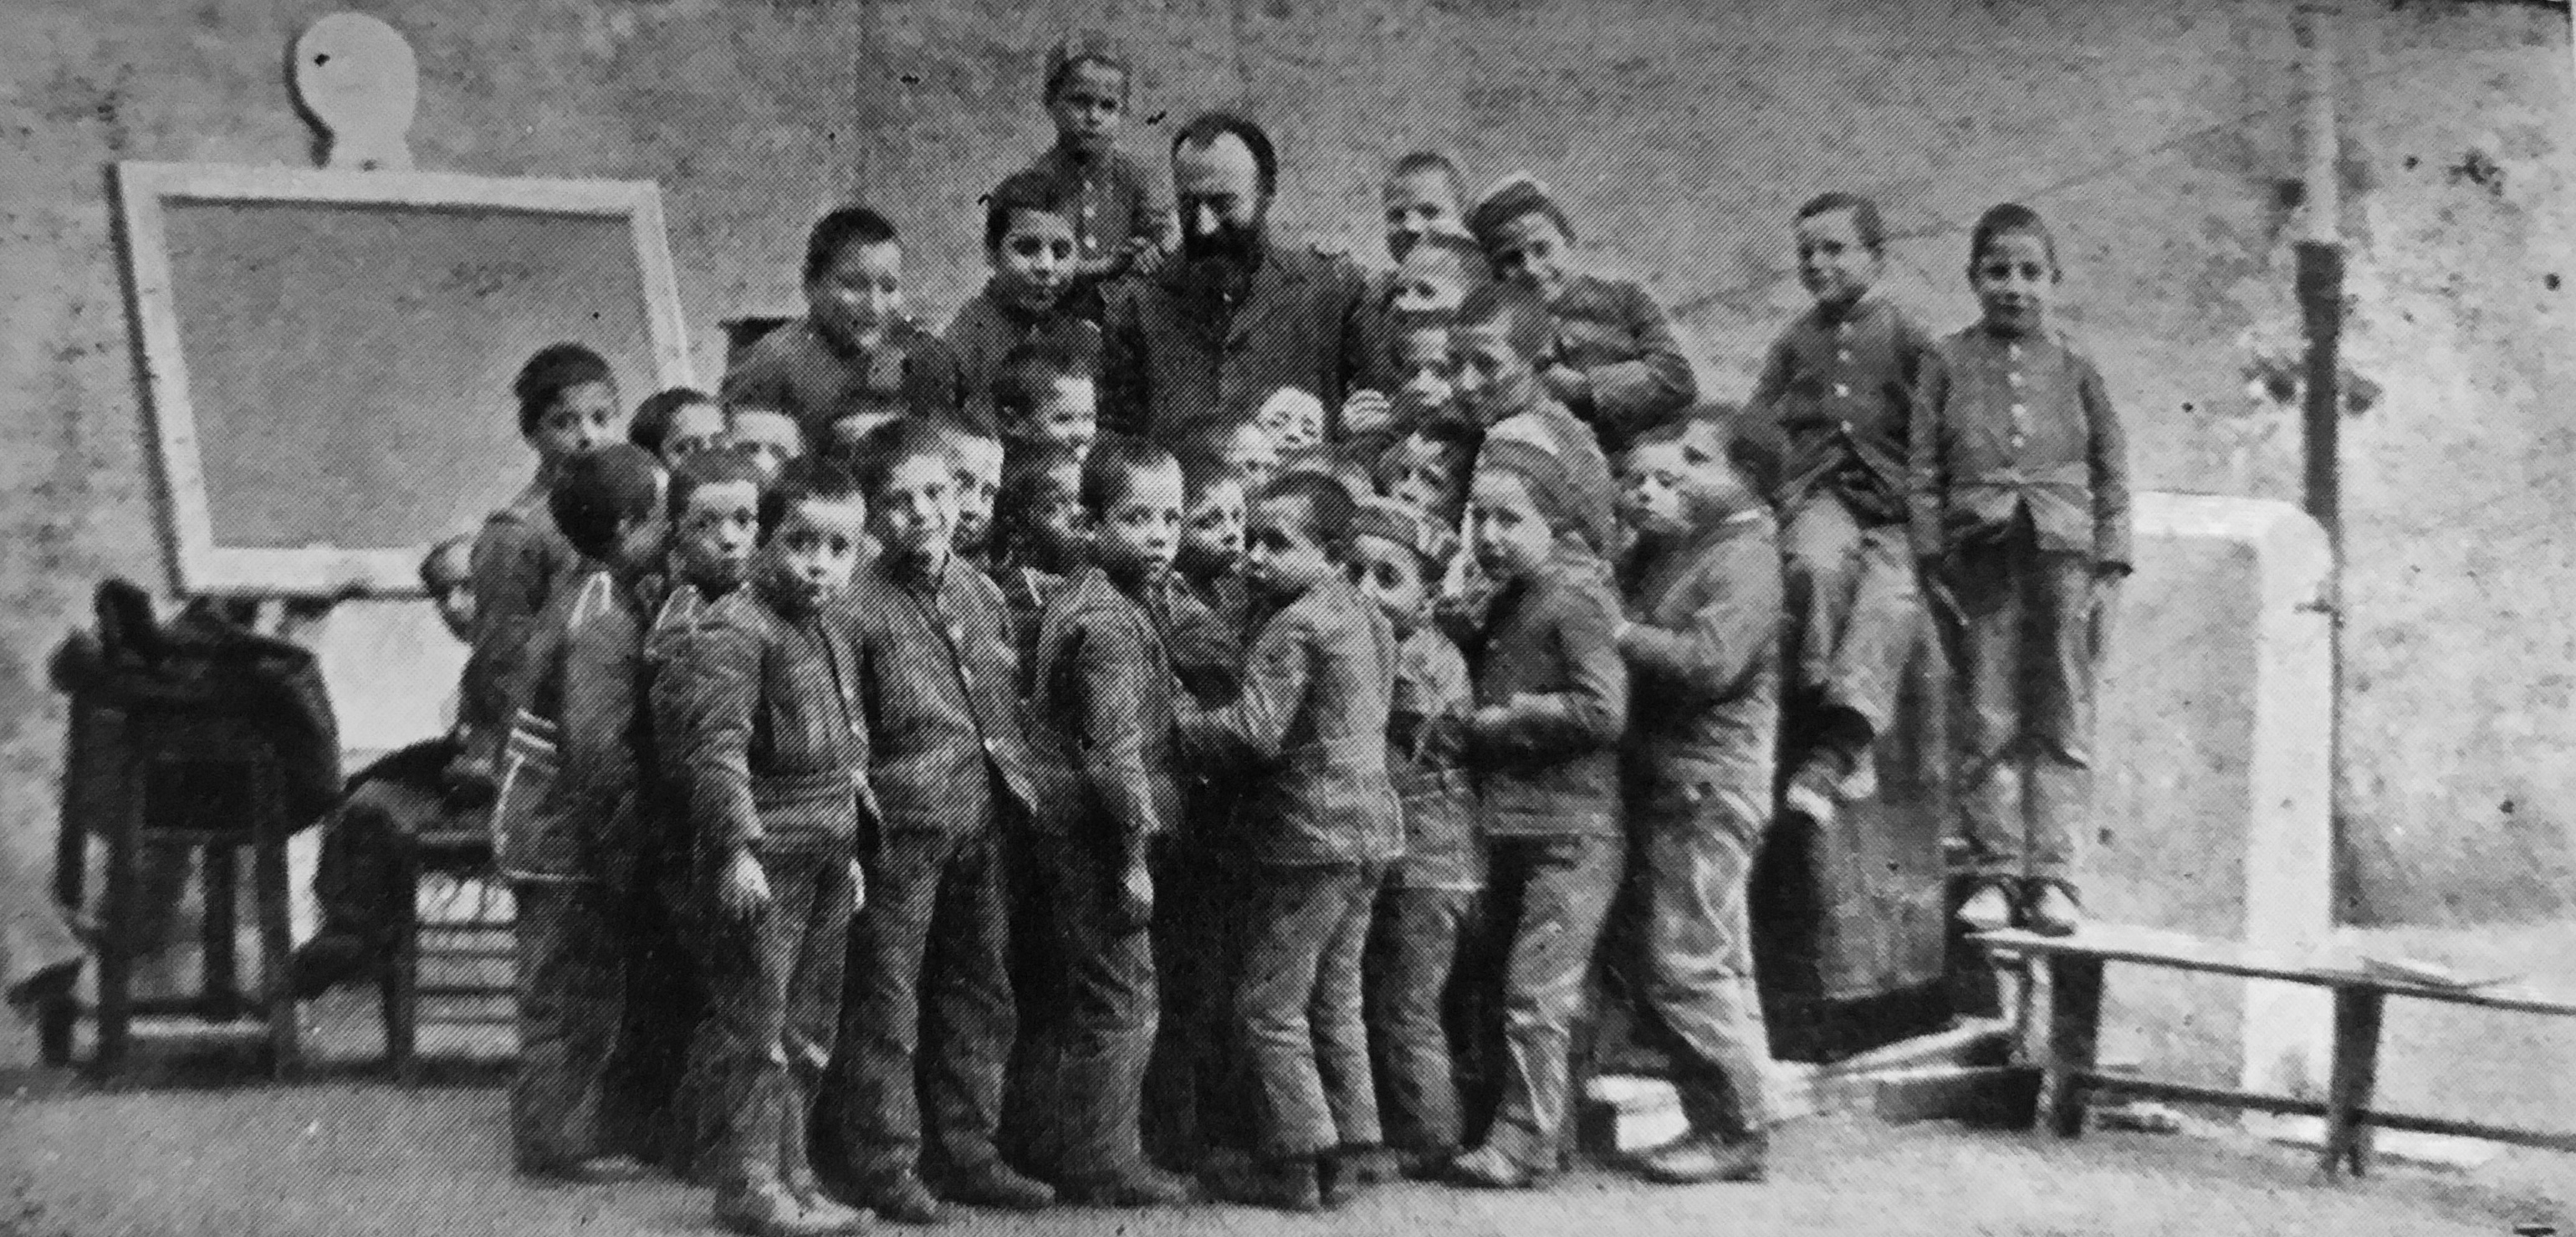 Bartolo Longo (center) with boys from his school for the figli carcerati — sons of convicts